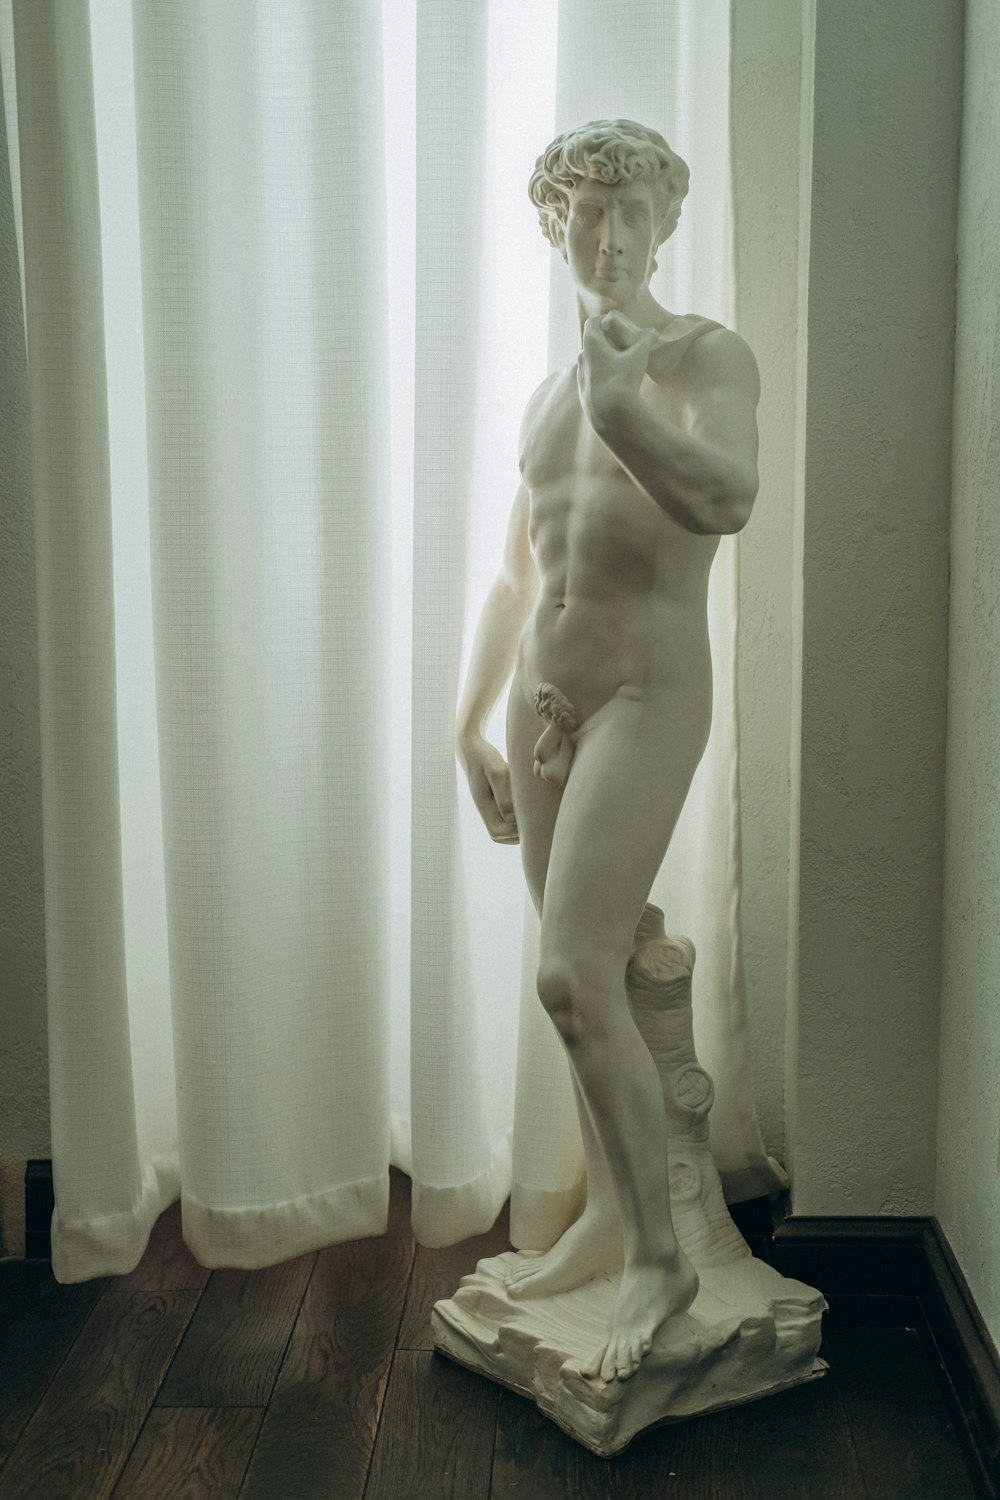 white ceramic statue near white window curtain